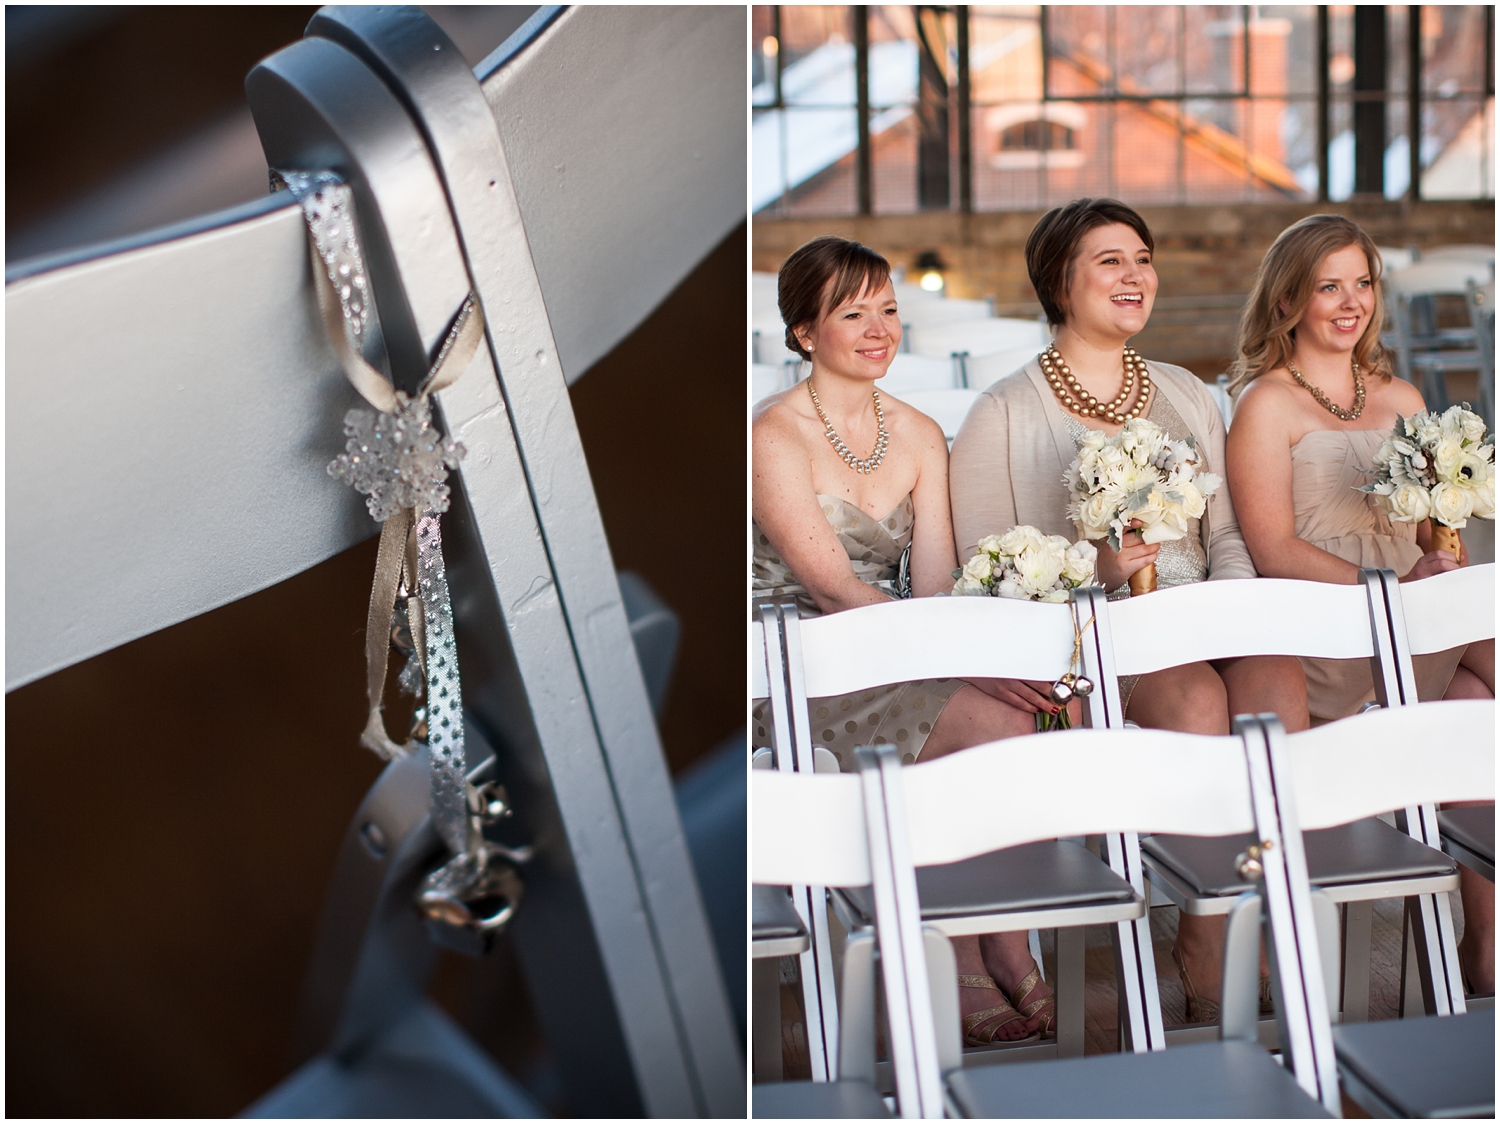 Jill Tiongco Photography | Ravenswood Event Center Wedding Photos | Chicago Wedding Photographer